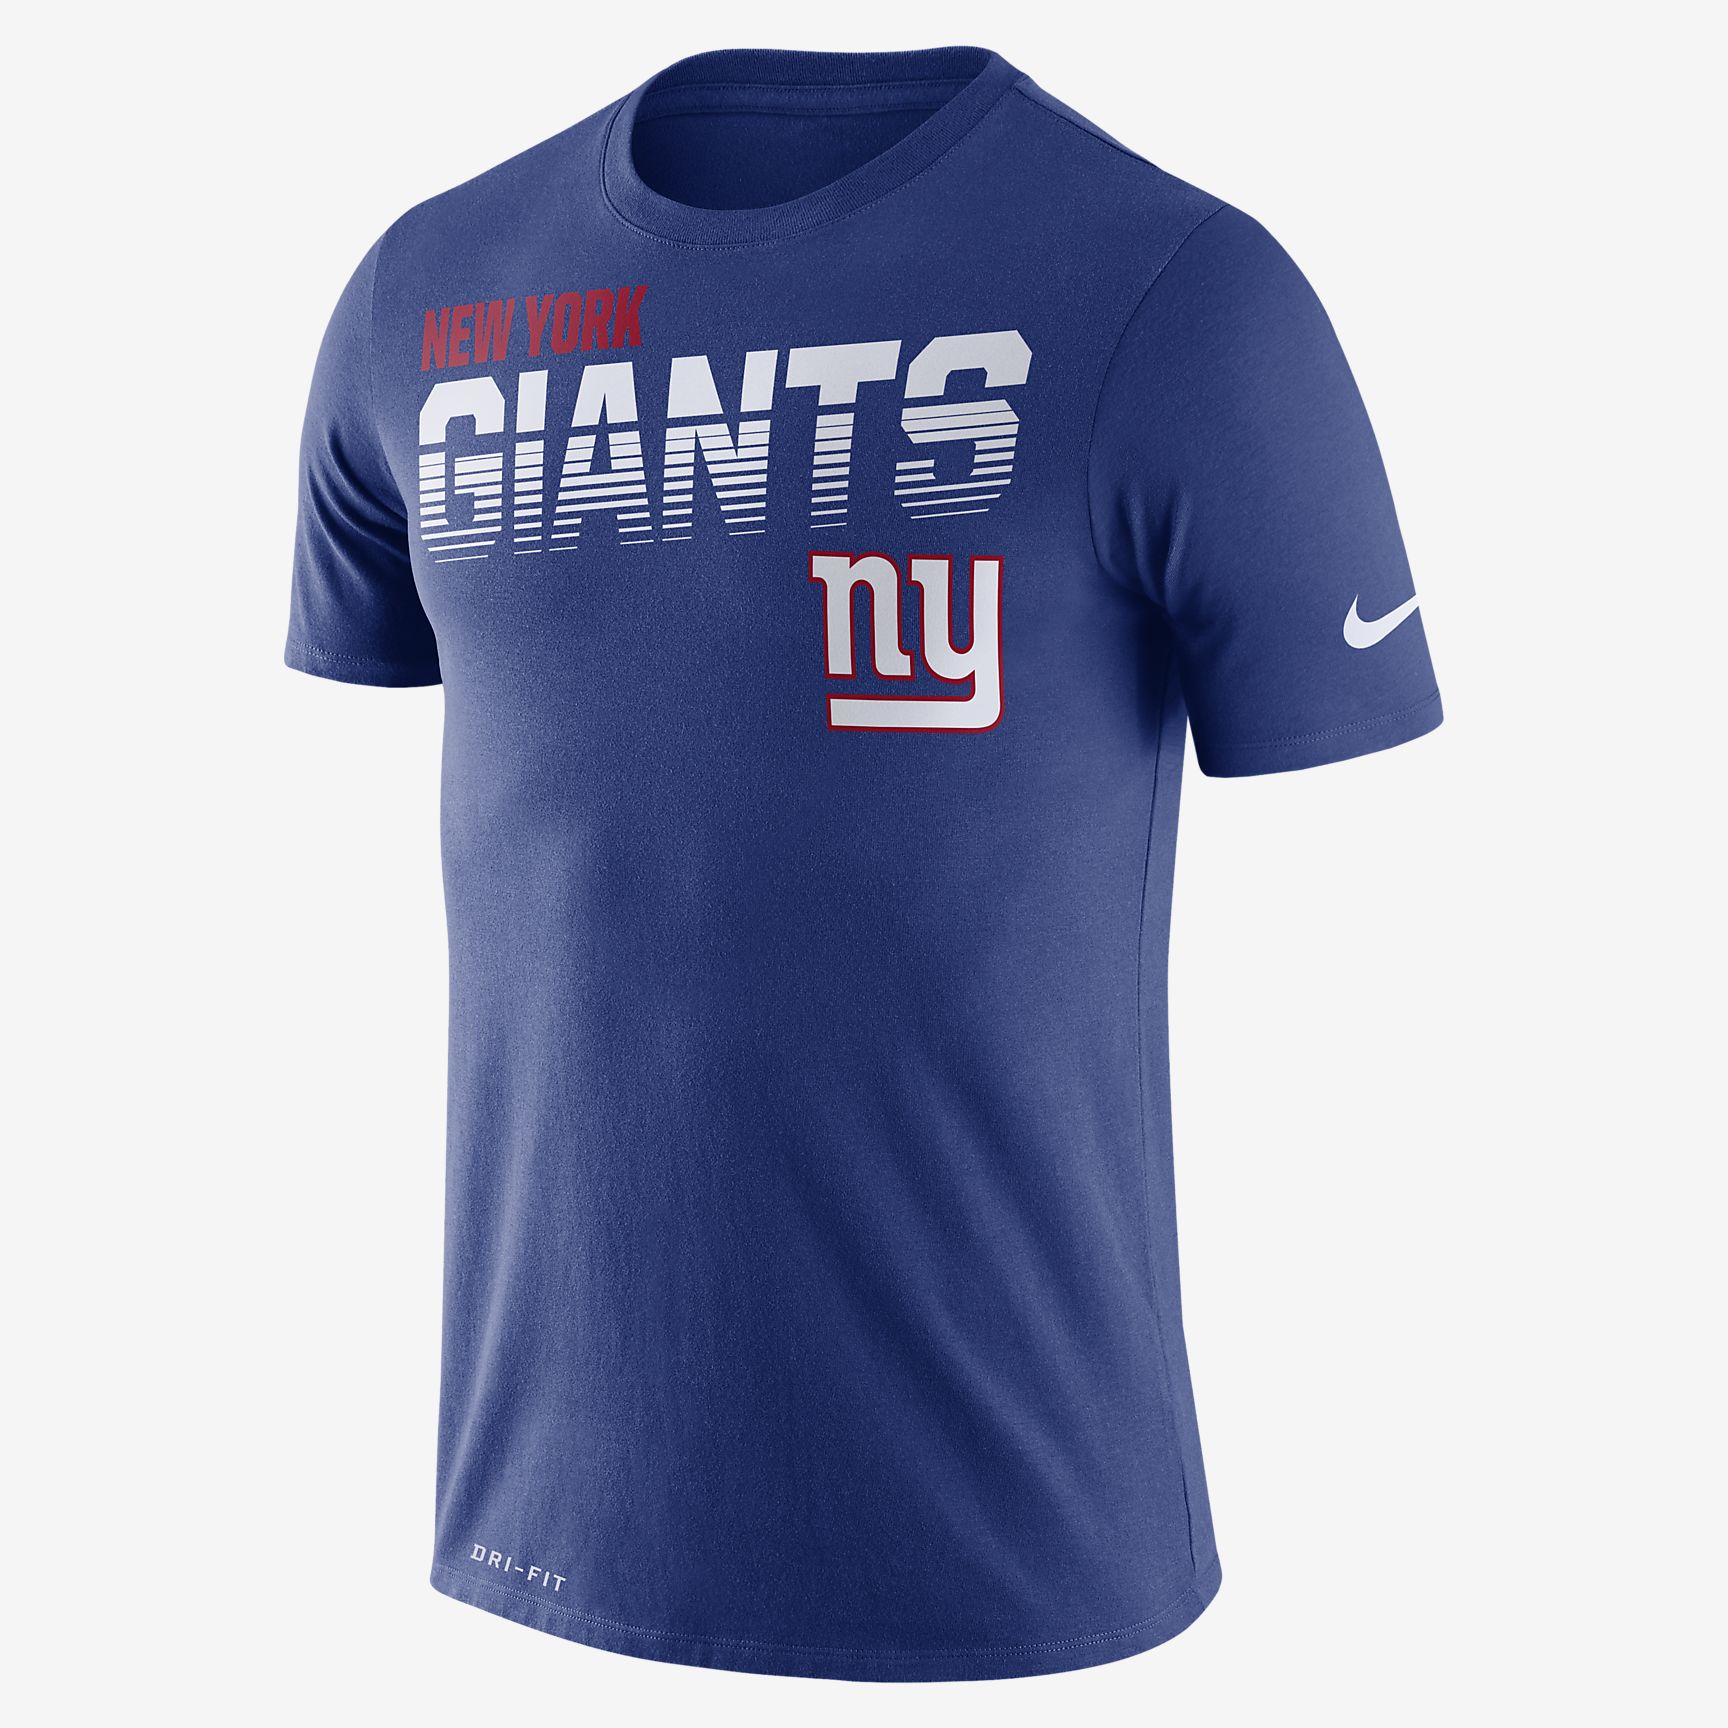 nike giants shirt